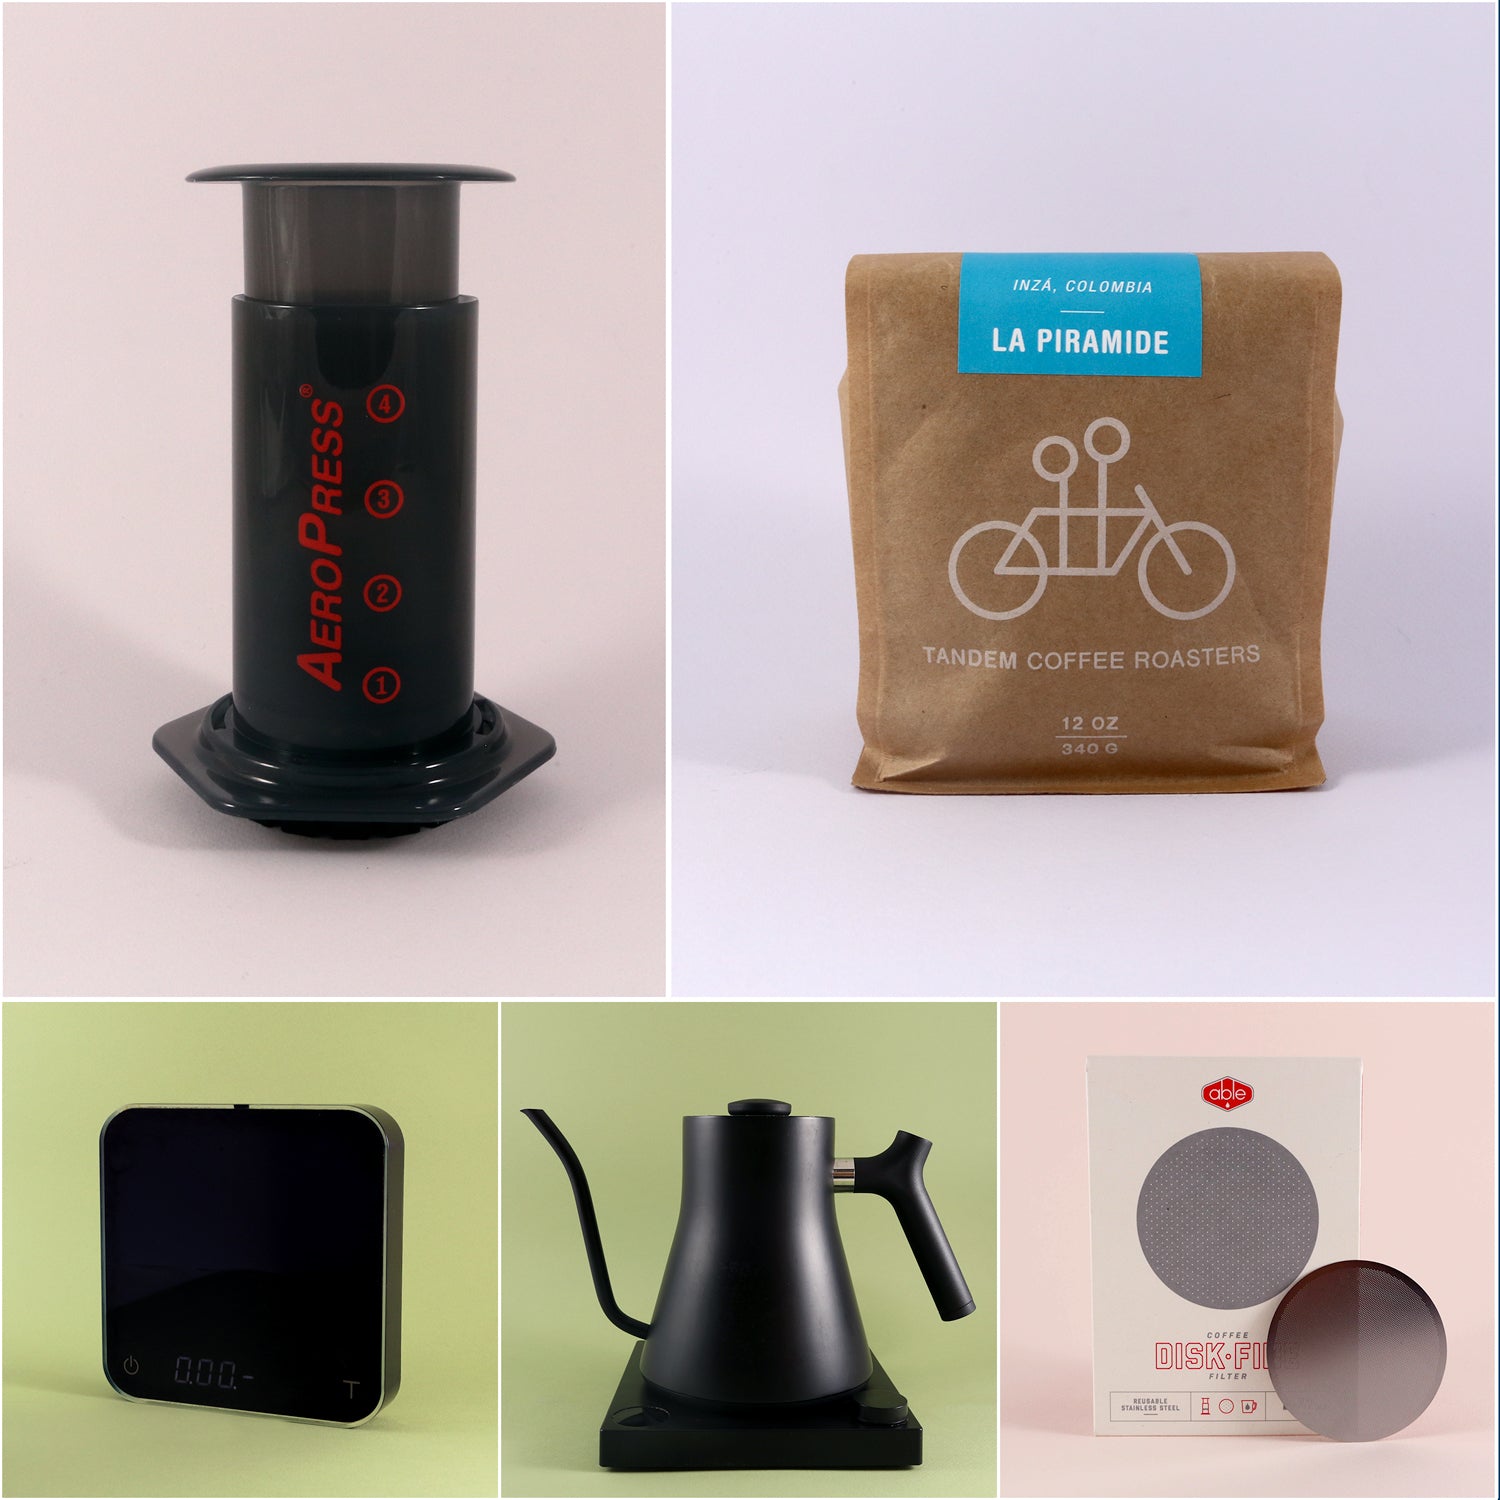 Buy Coffee Accessories Online - V60, AeroPress & More